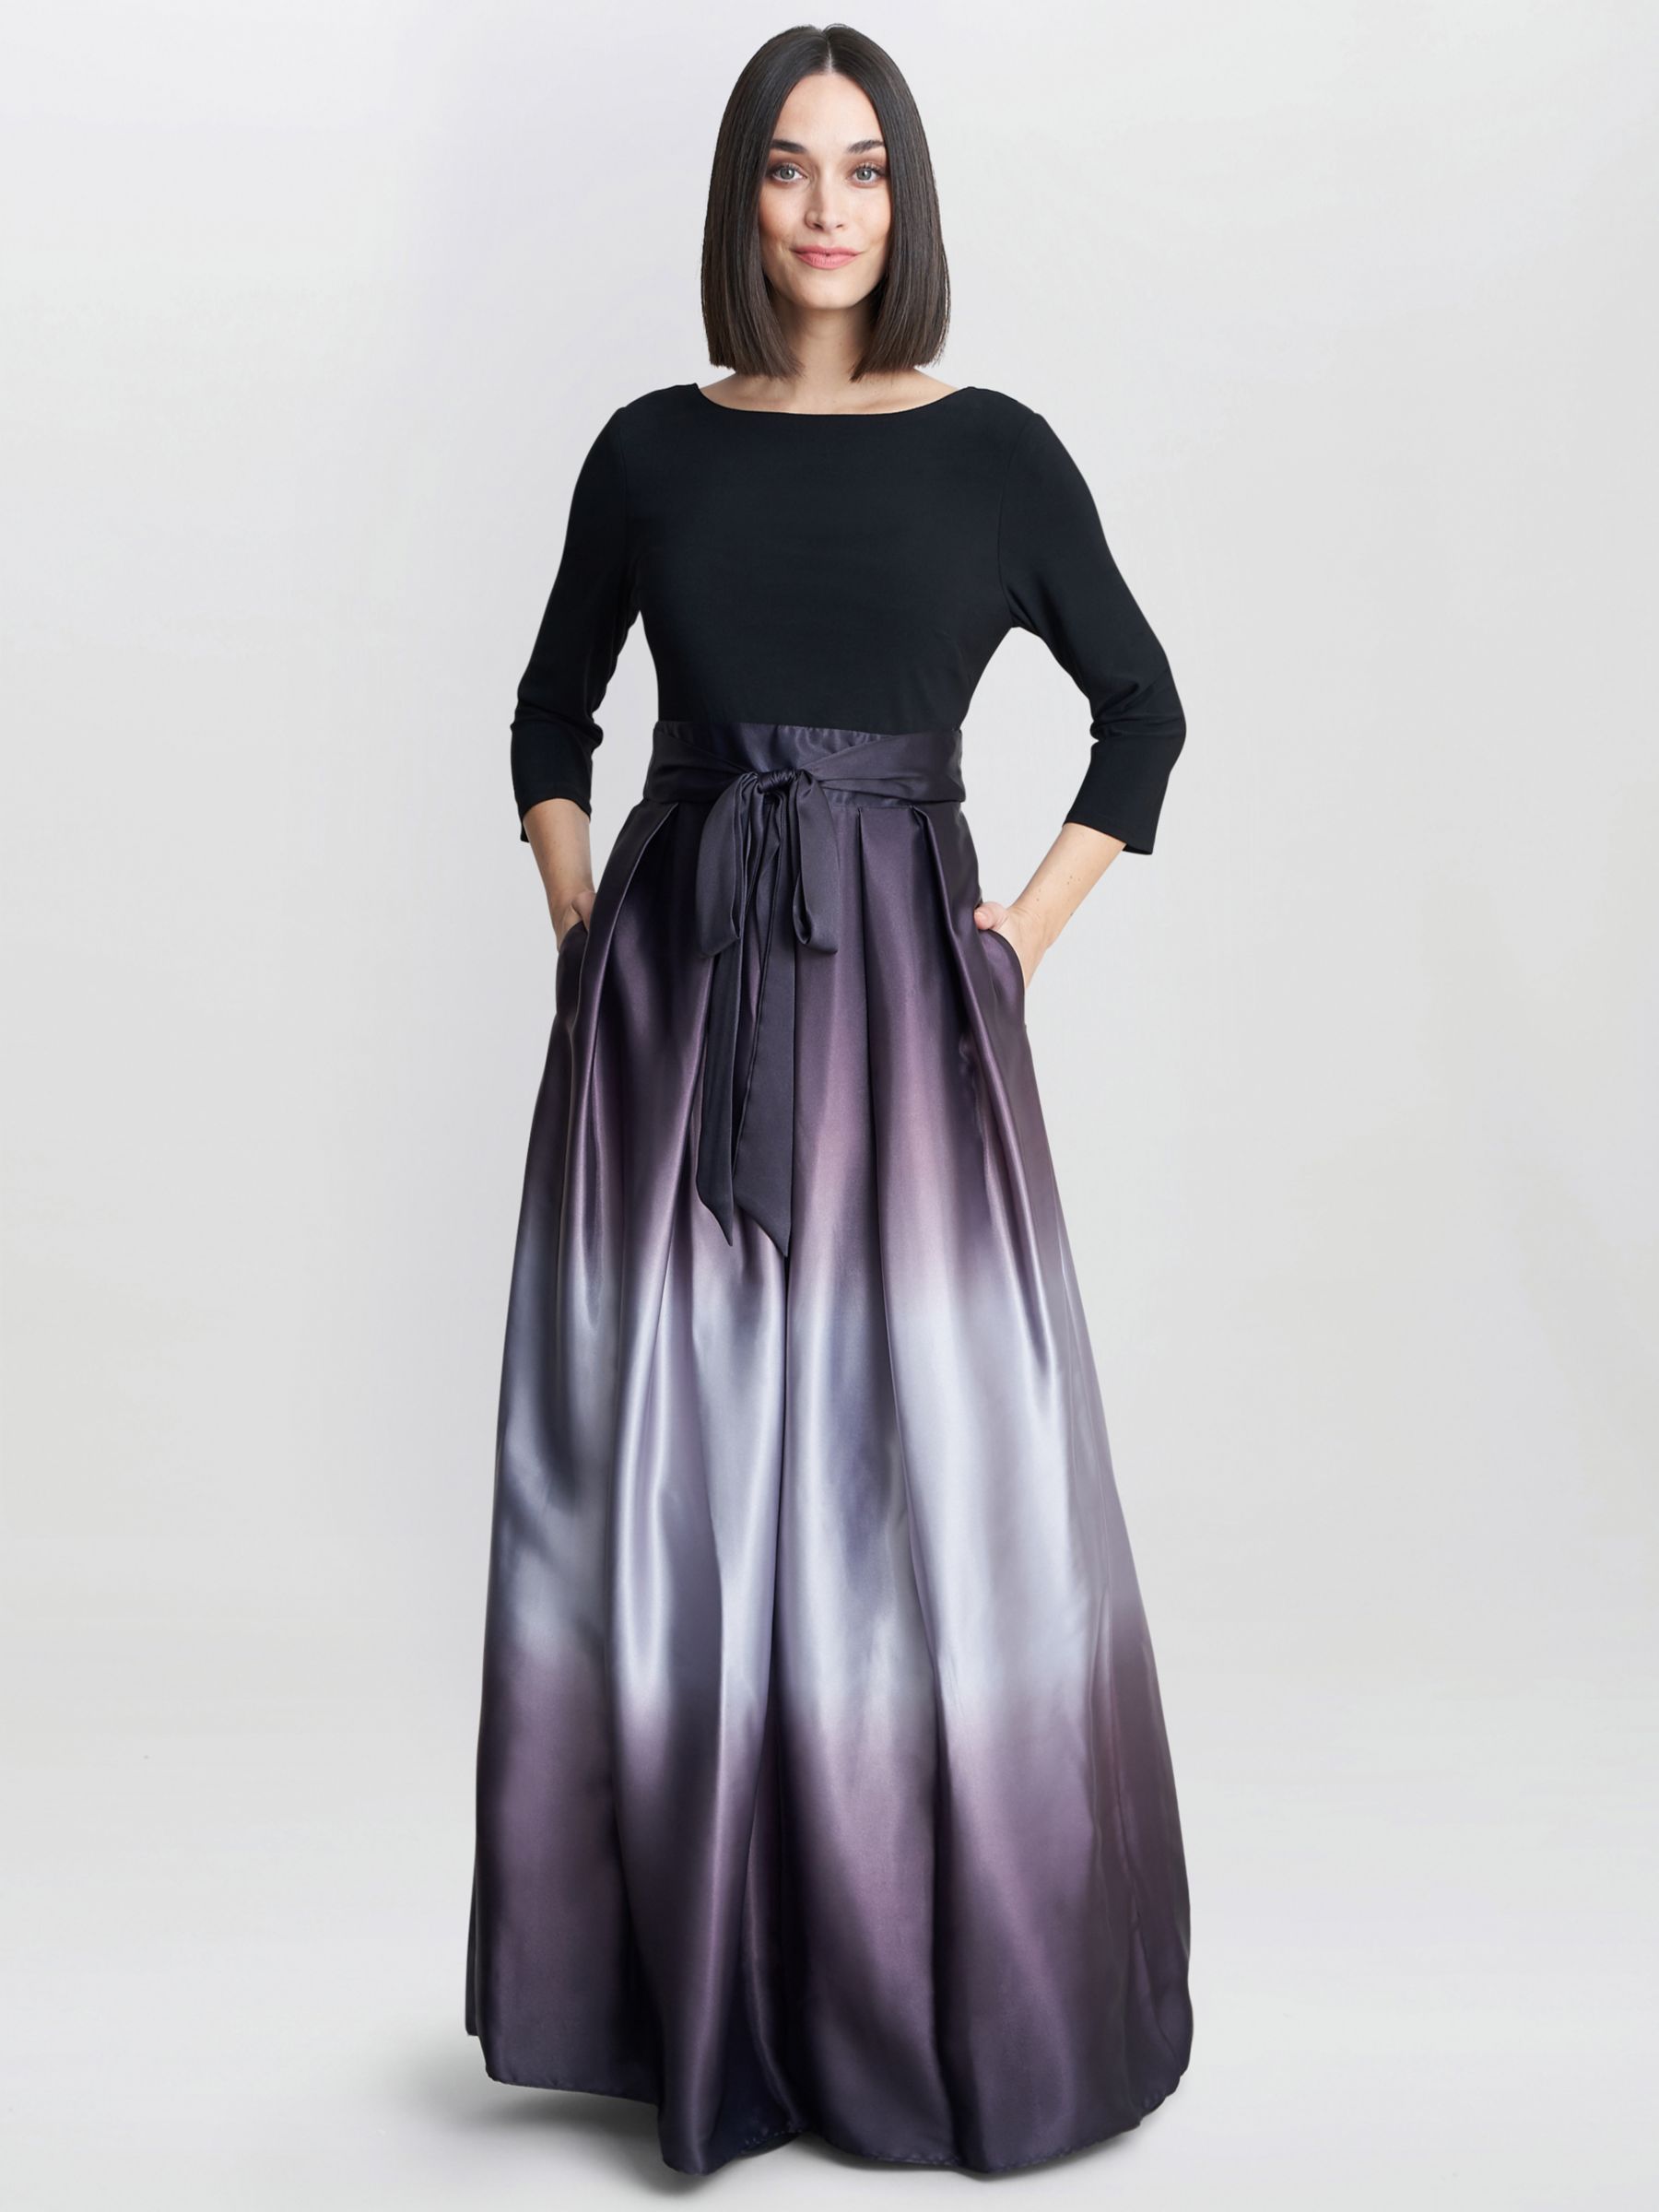 Gina Bacconi Ingrid V Neck Back Ombre Satin Maxi Dress, Black/Silver, 10